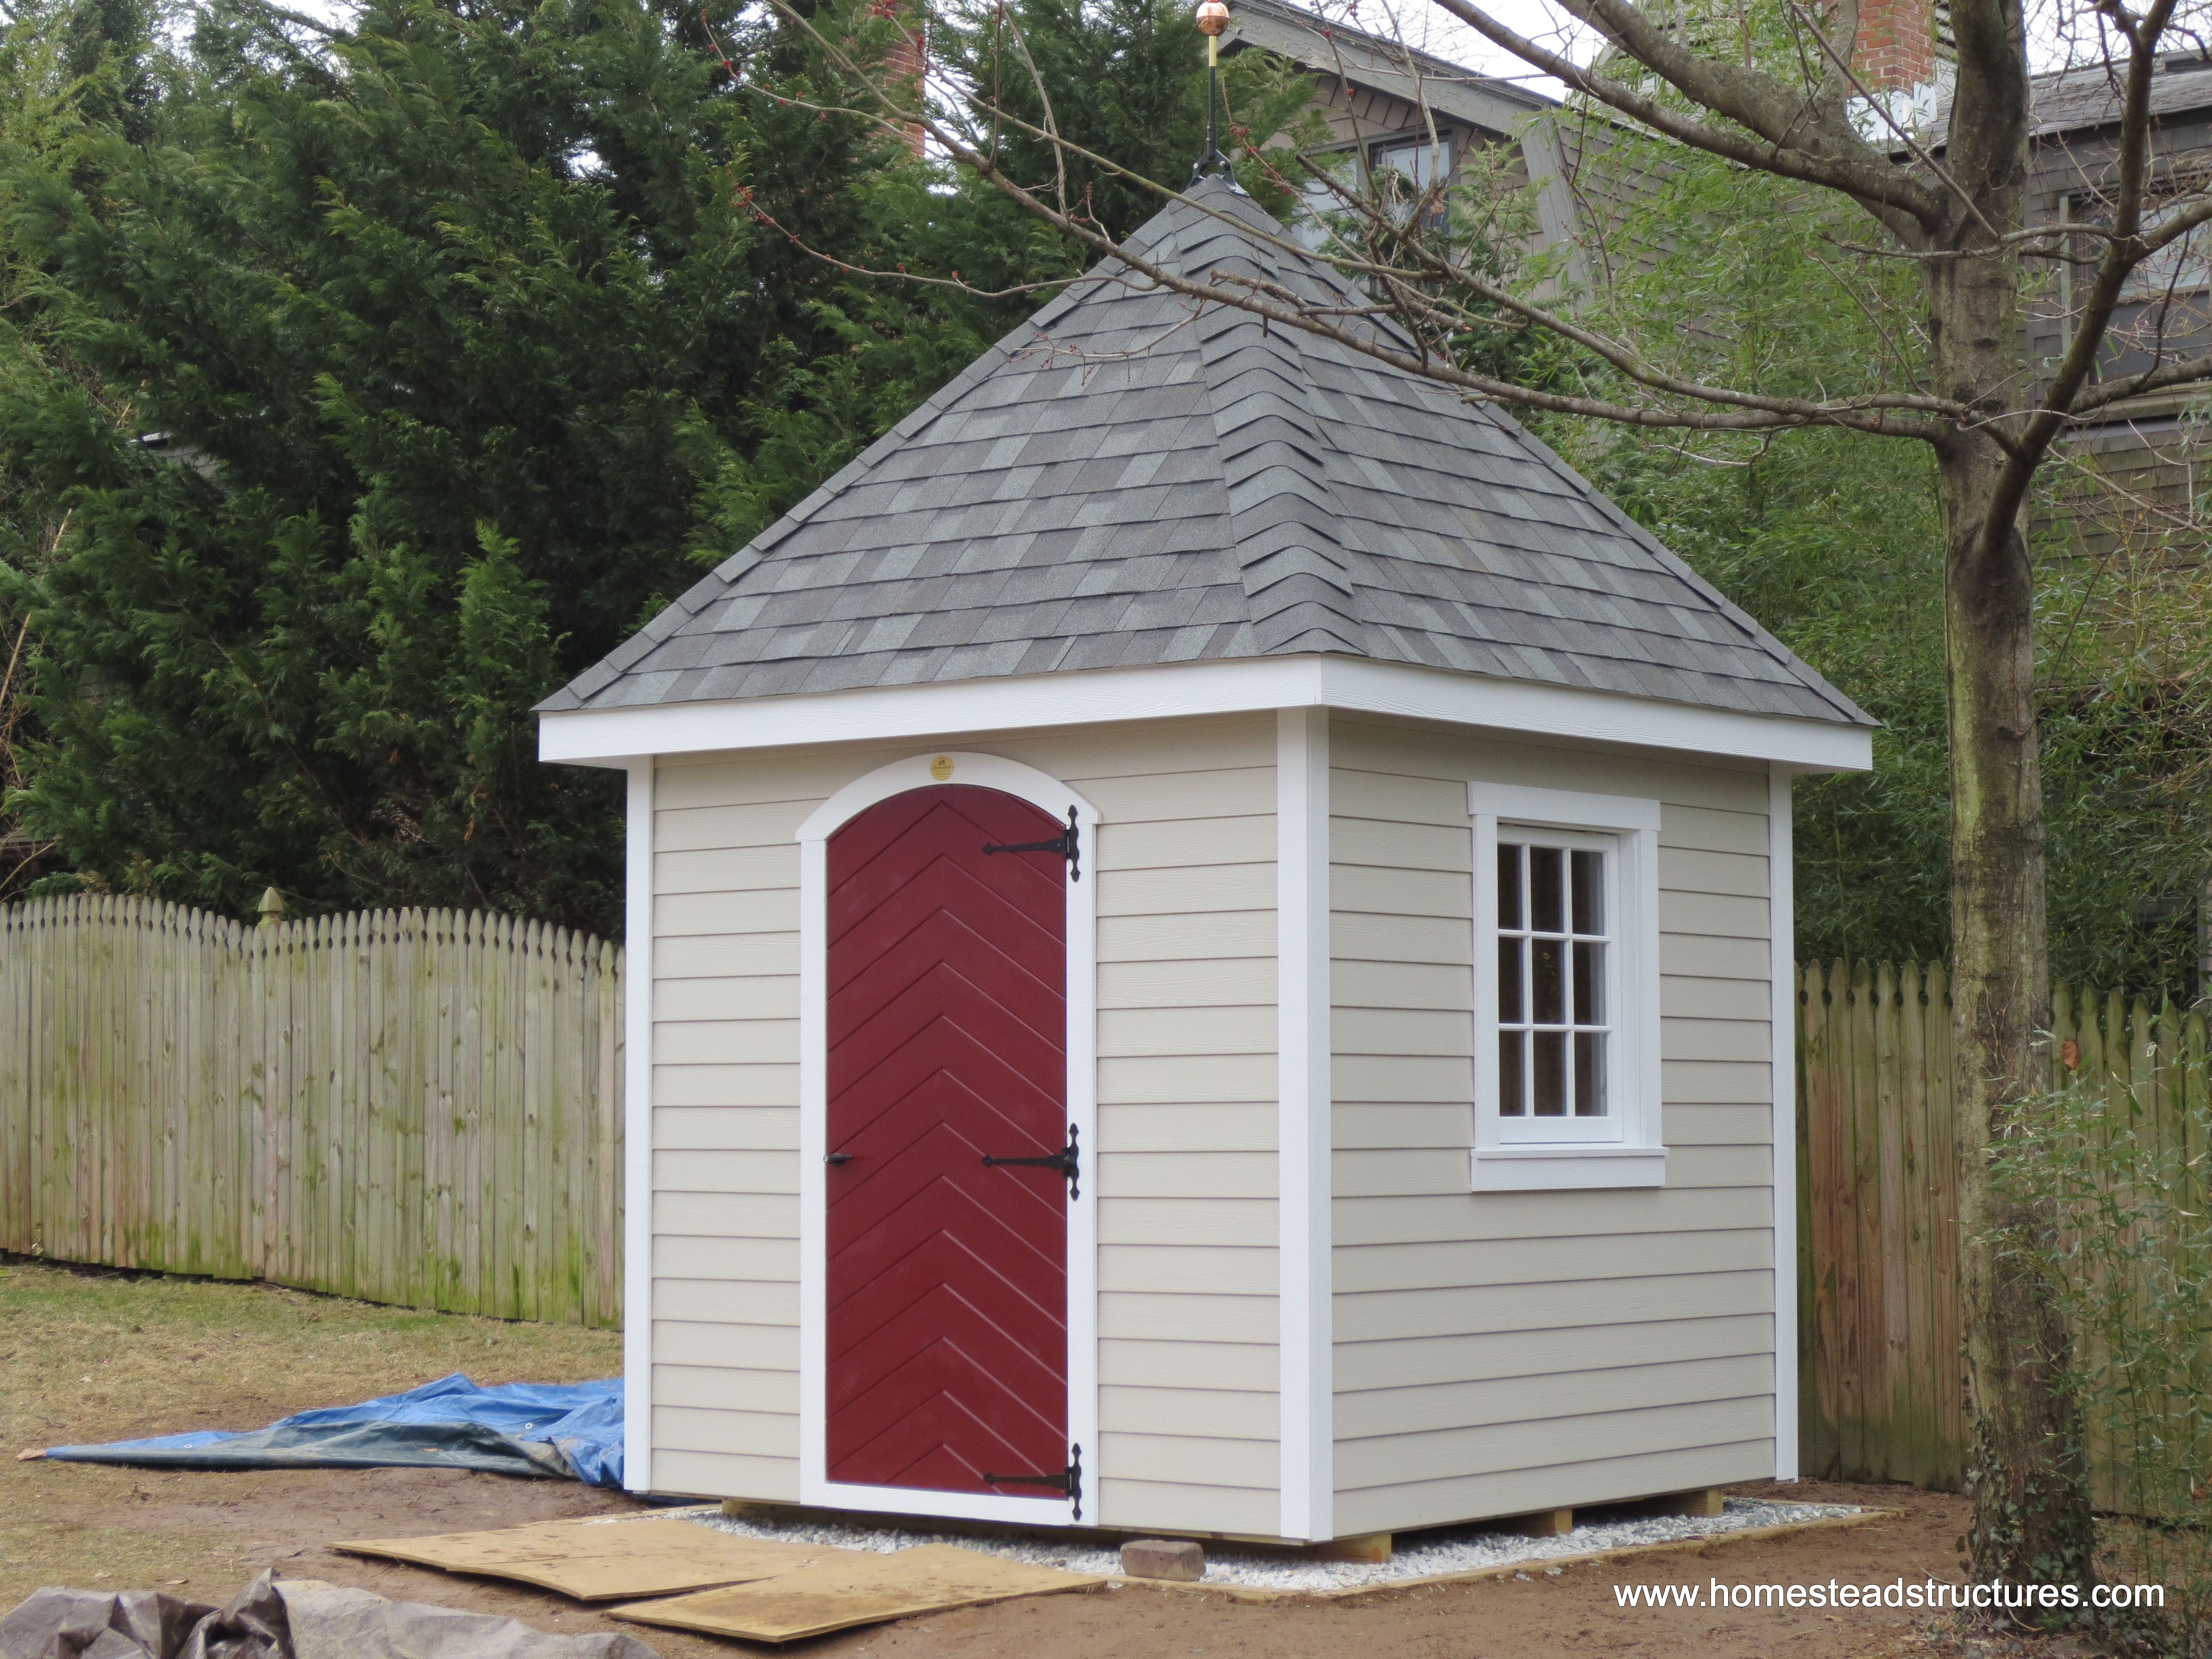 Hip roof designs for sheds  Alleviate